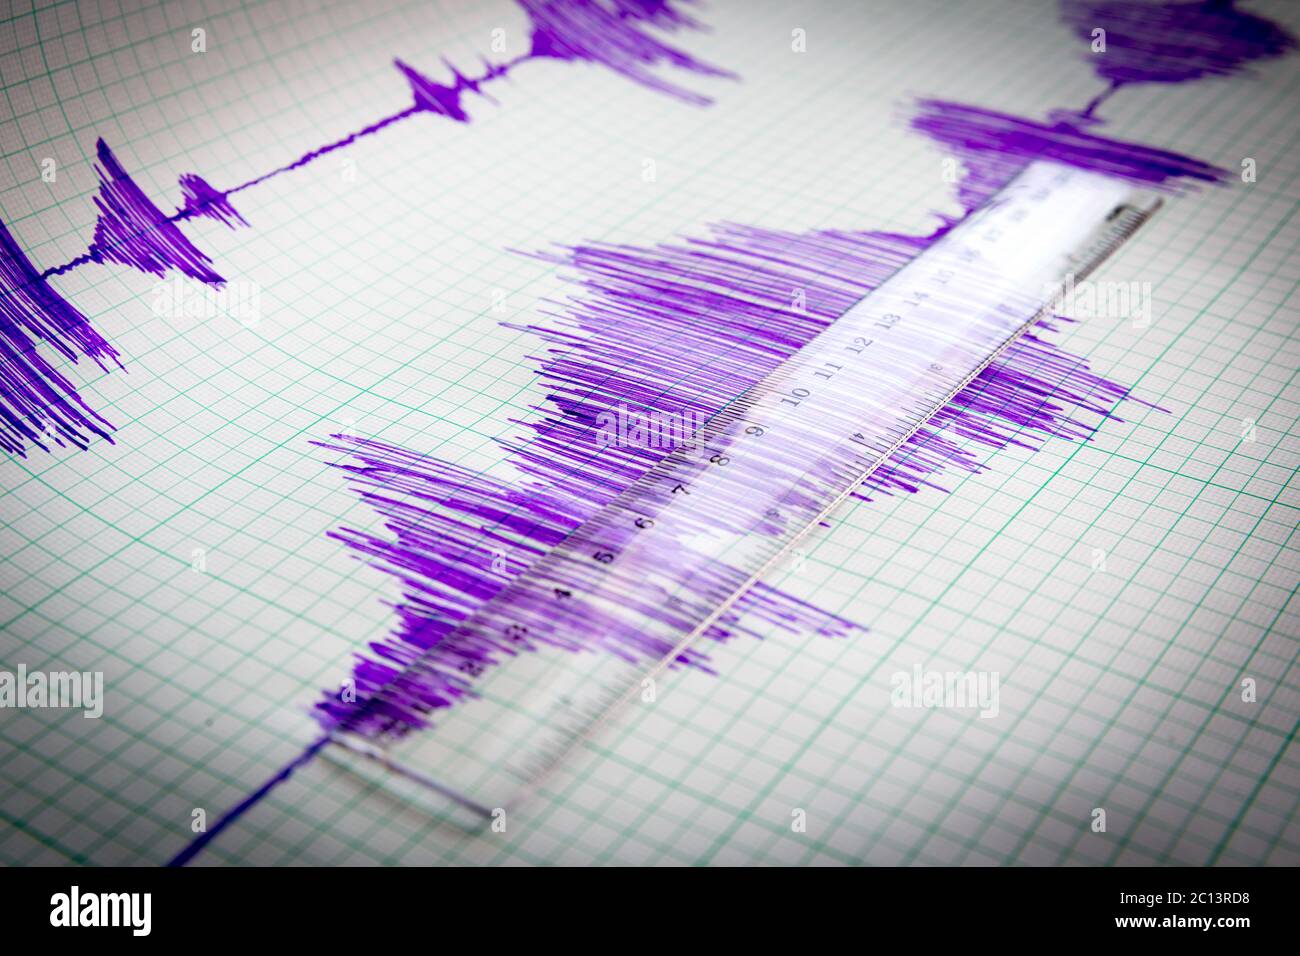 Seismologisches Geräteblatt - Seismometer Vignette Stockfoto